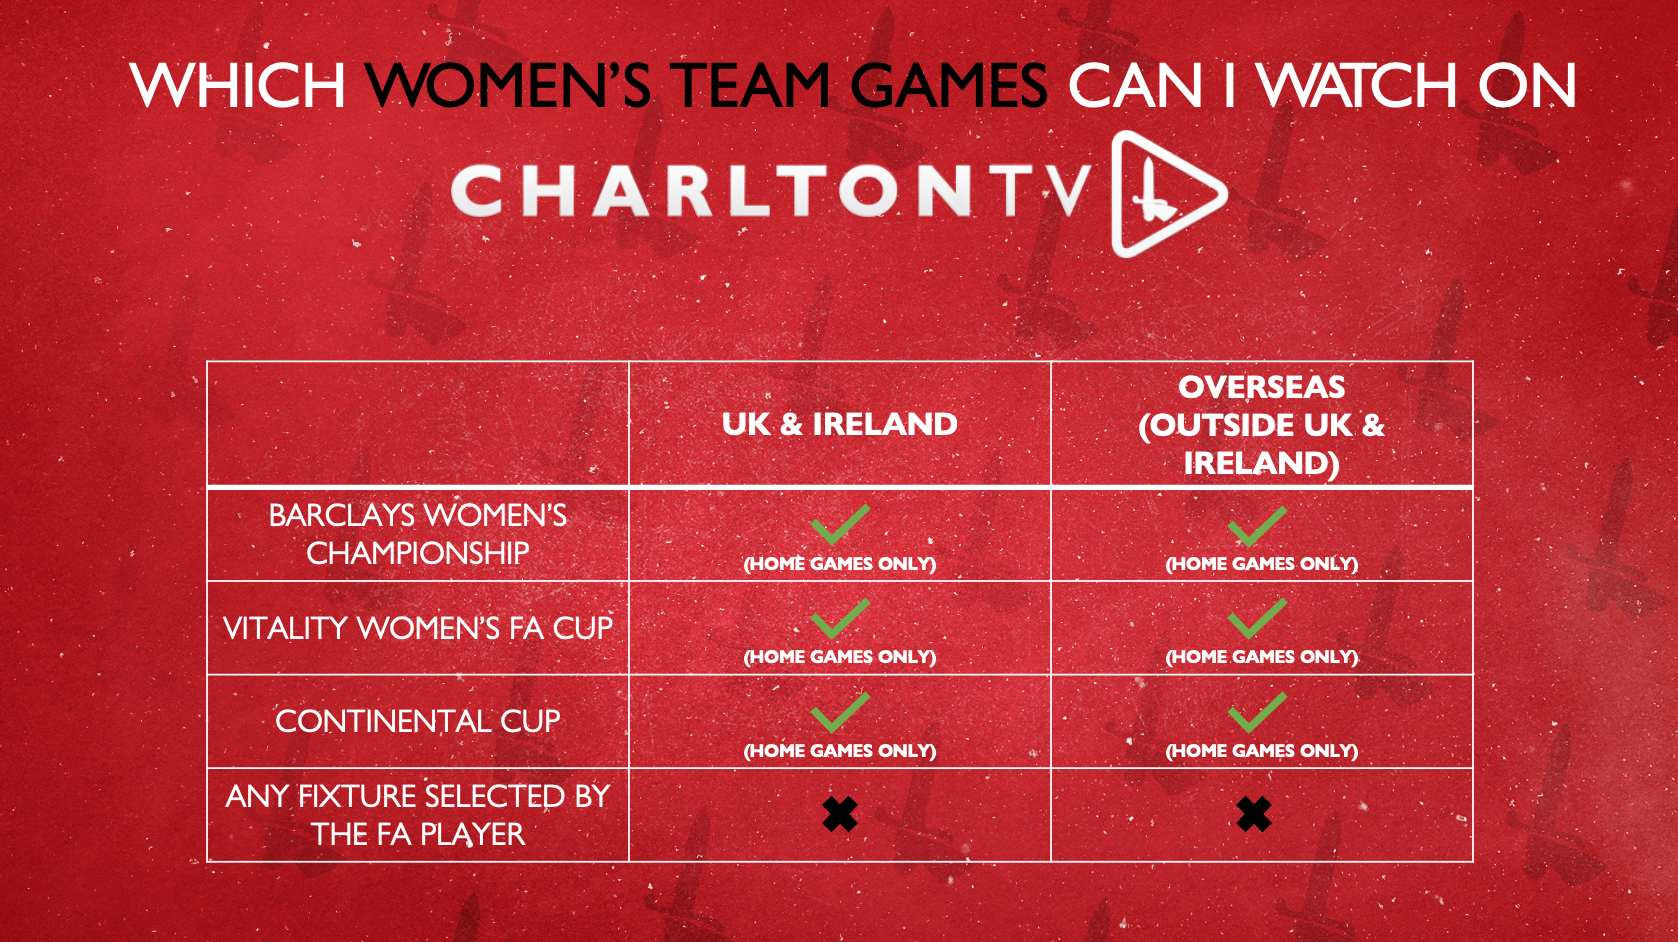 CharltonTV women's team games you can watch